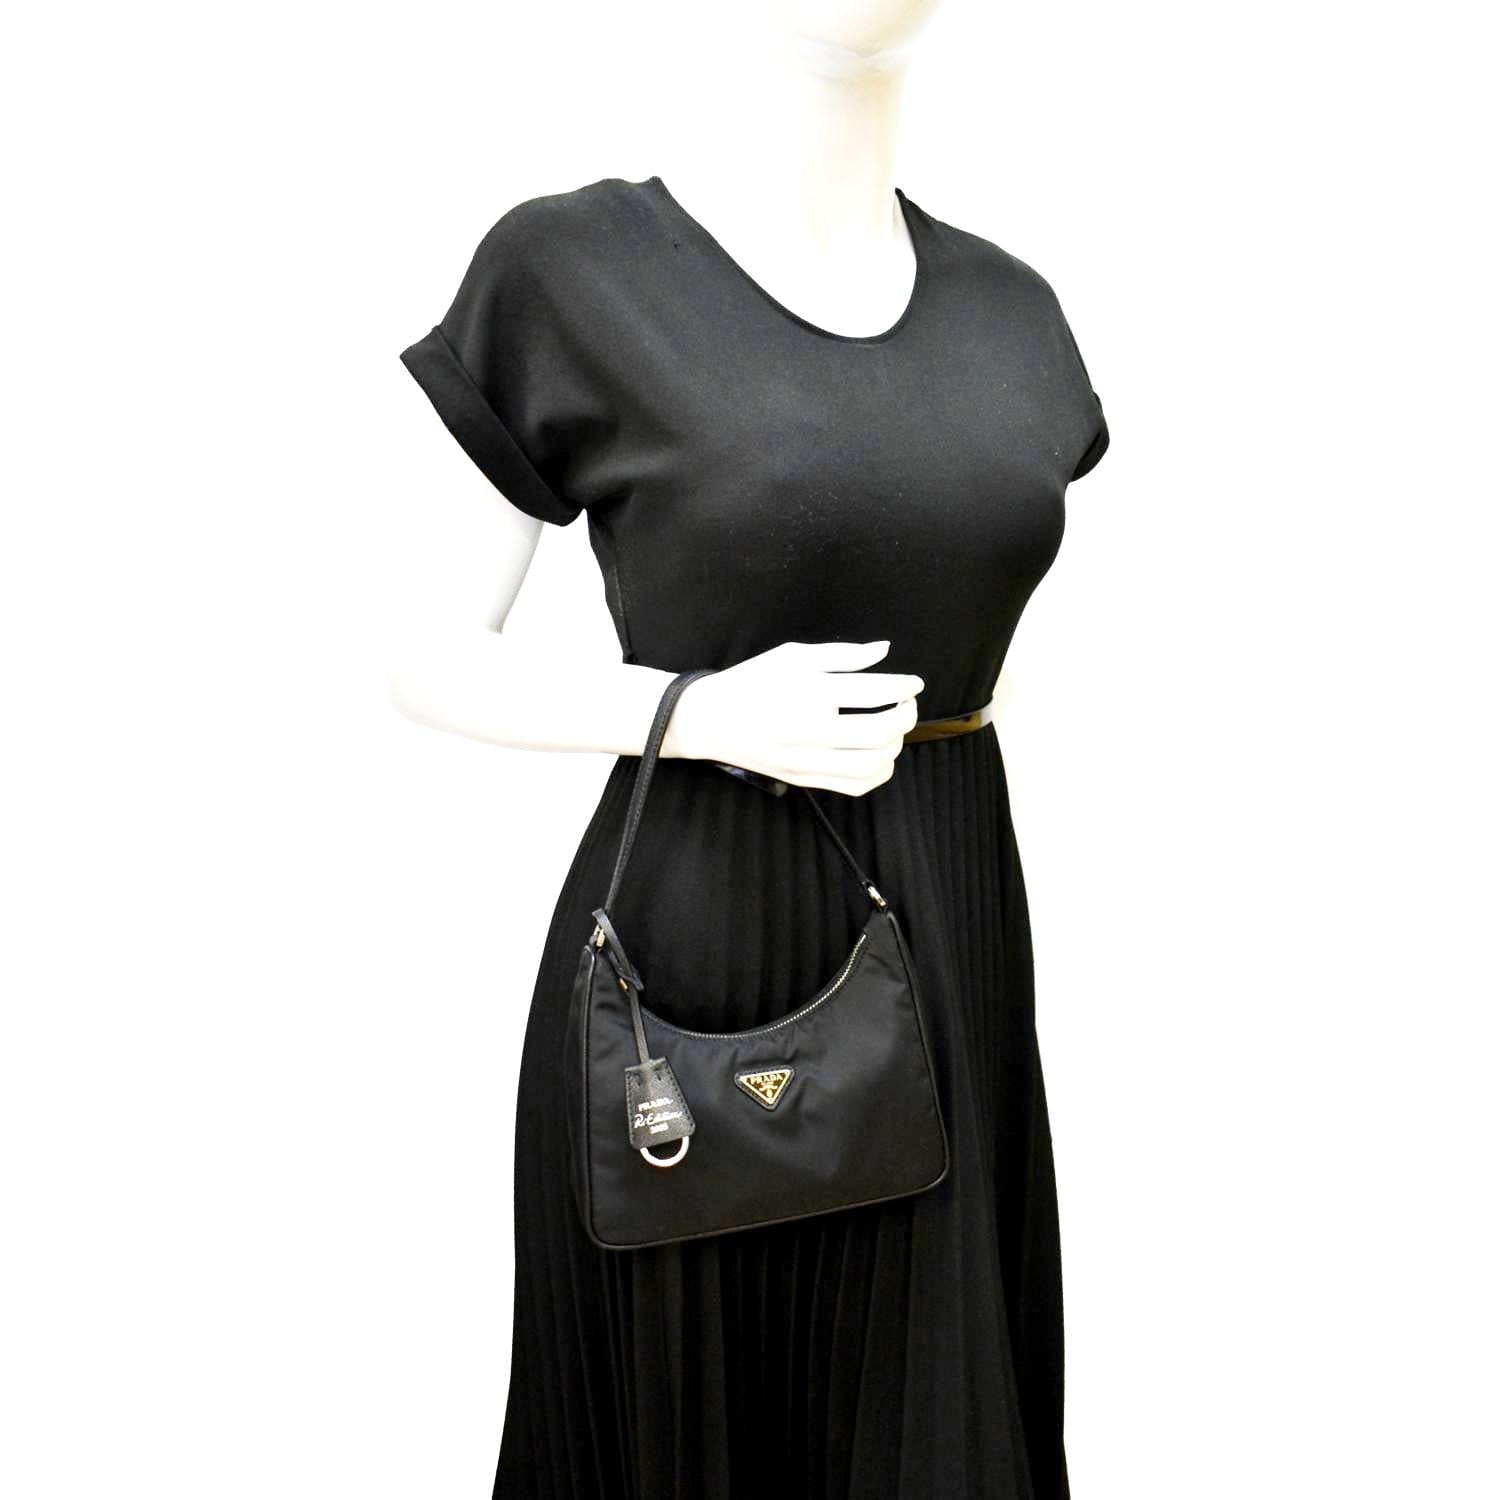 Re Edition 2005 Re Nylon Shoulder Bag in Black - Prada